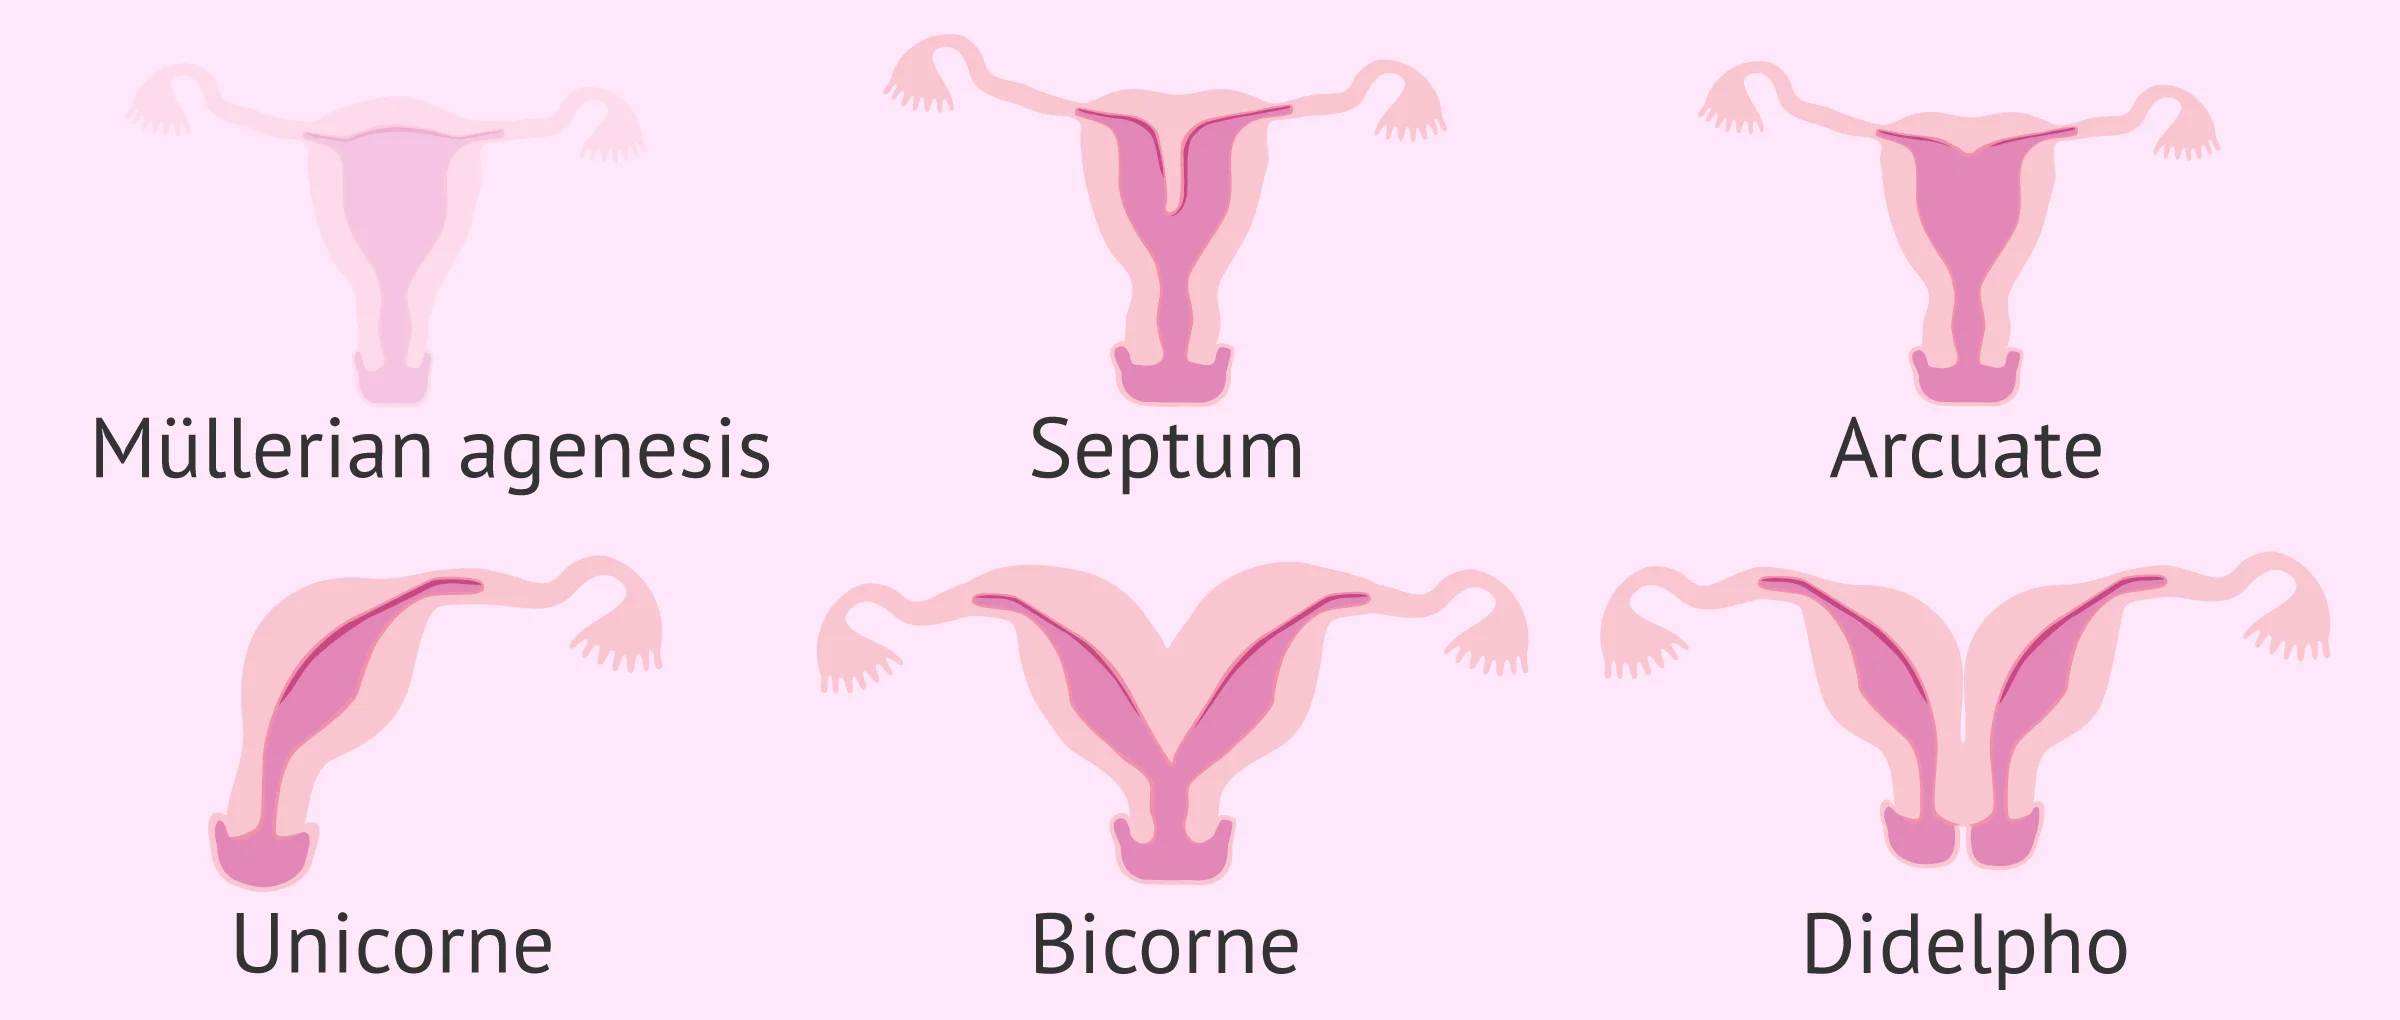 Uterine Factor Infertility